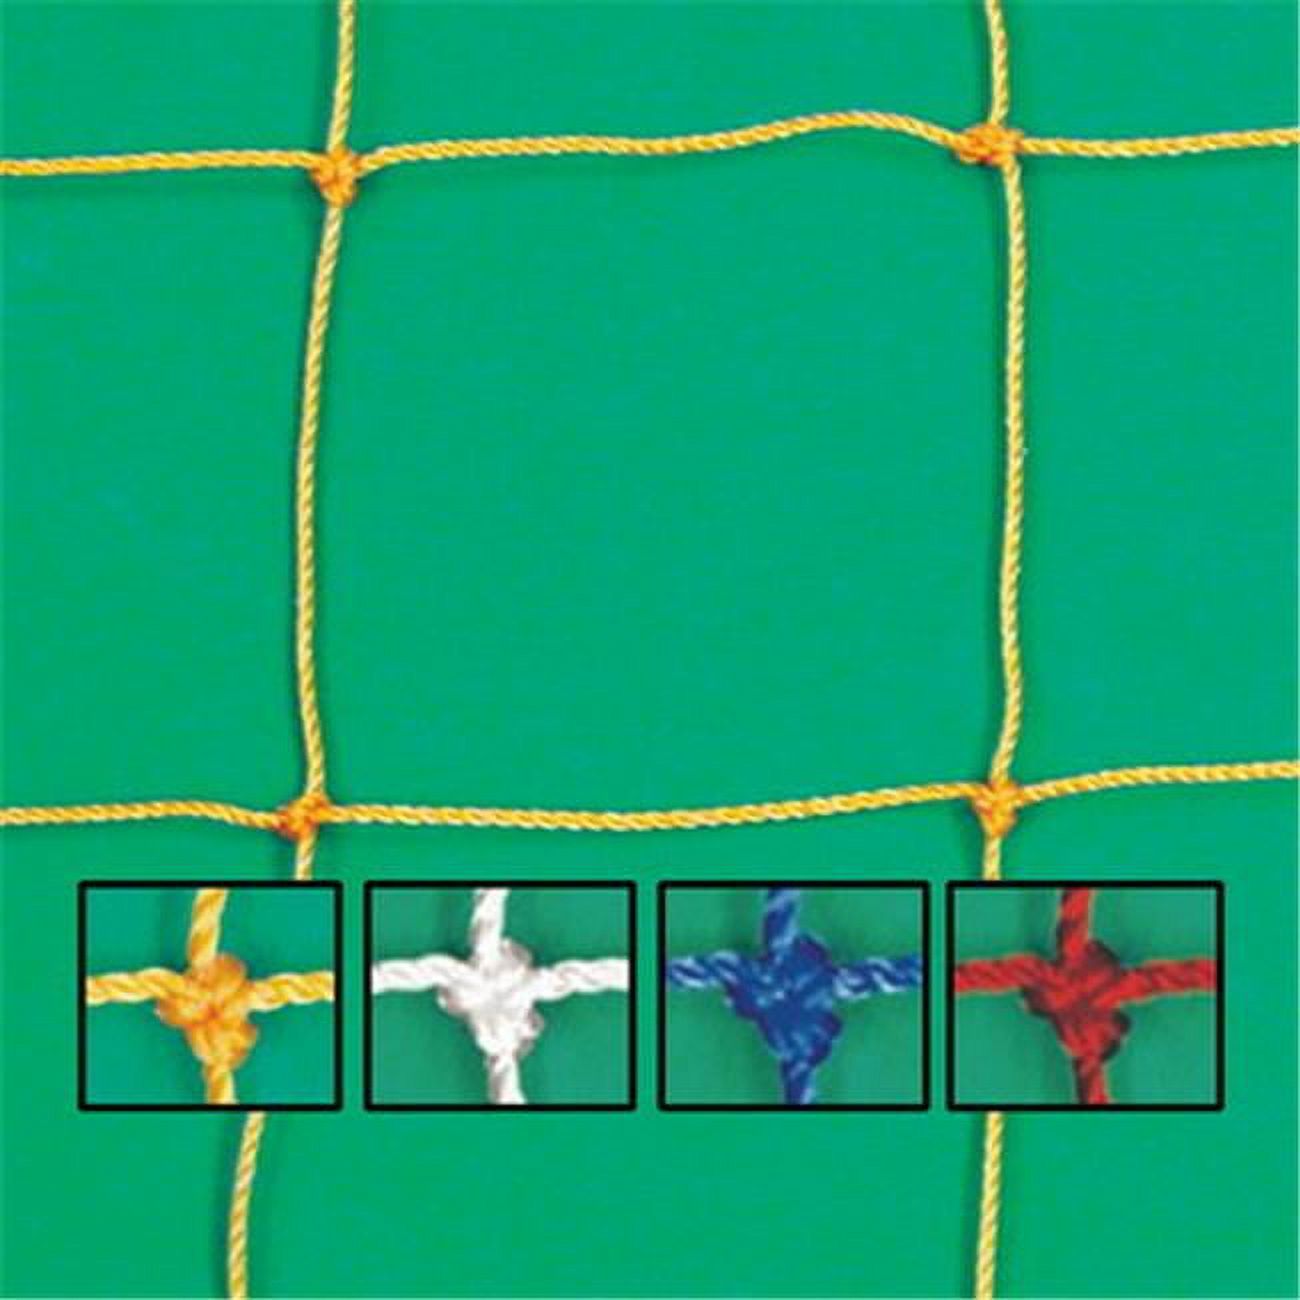 Alumagoal SN383ECOW Recreational Soccer Net - 8 x 24 x 5 x 10 ft. - image 1 of 2